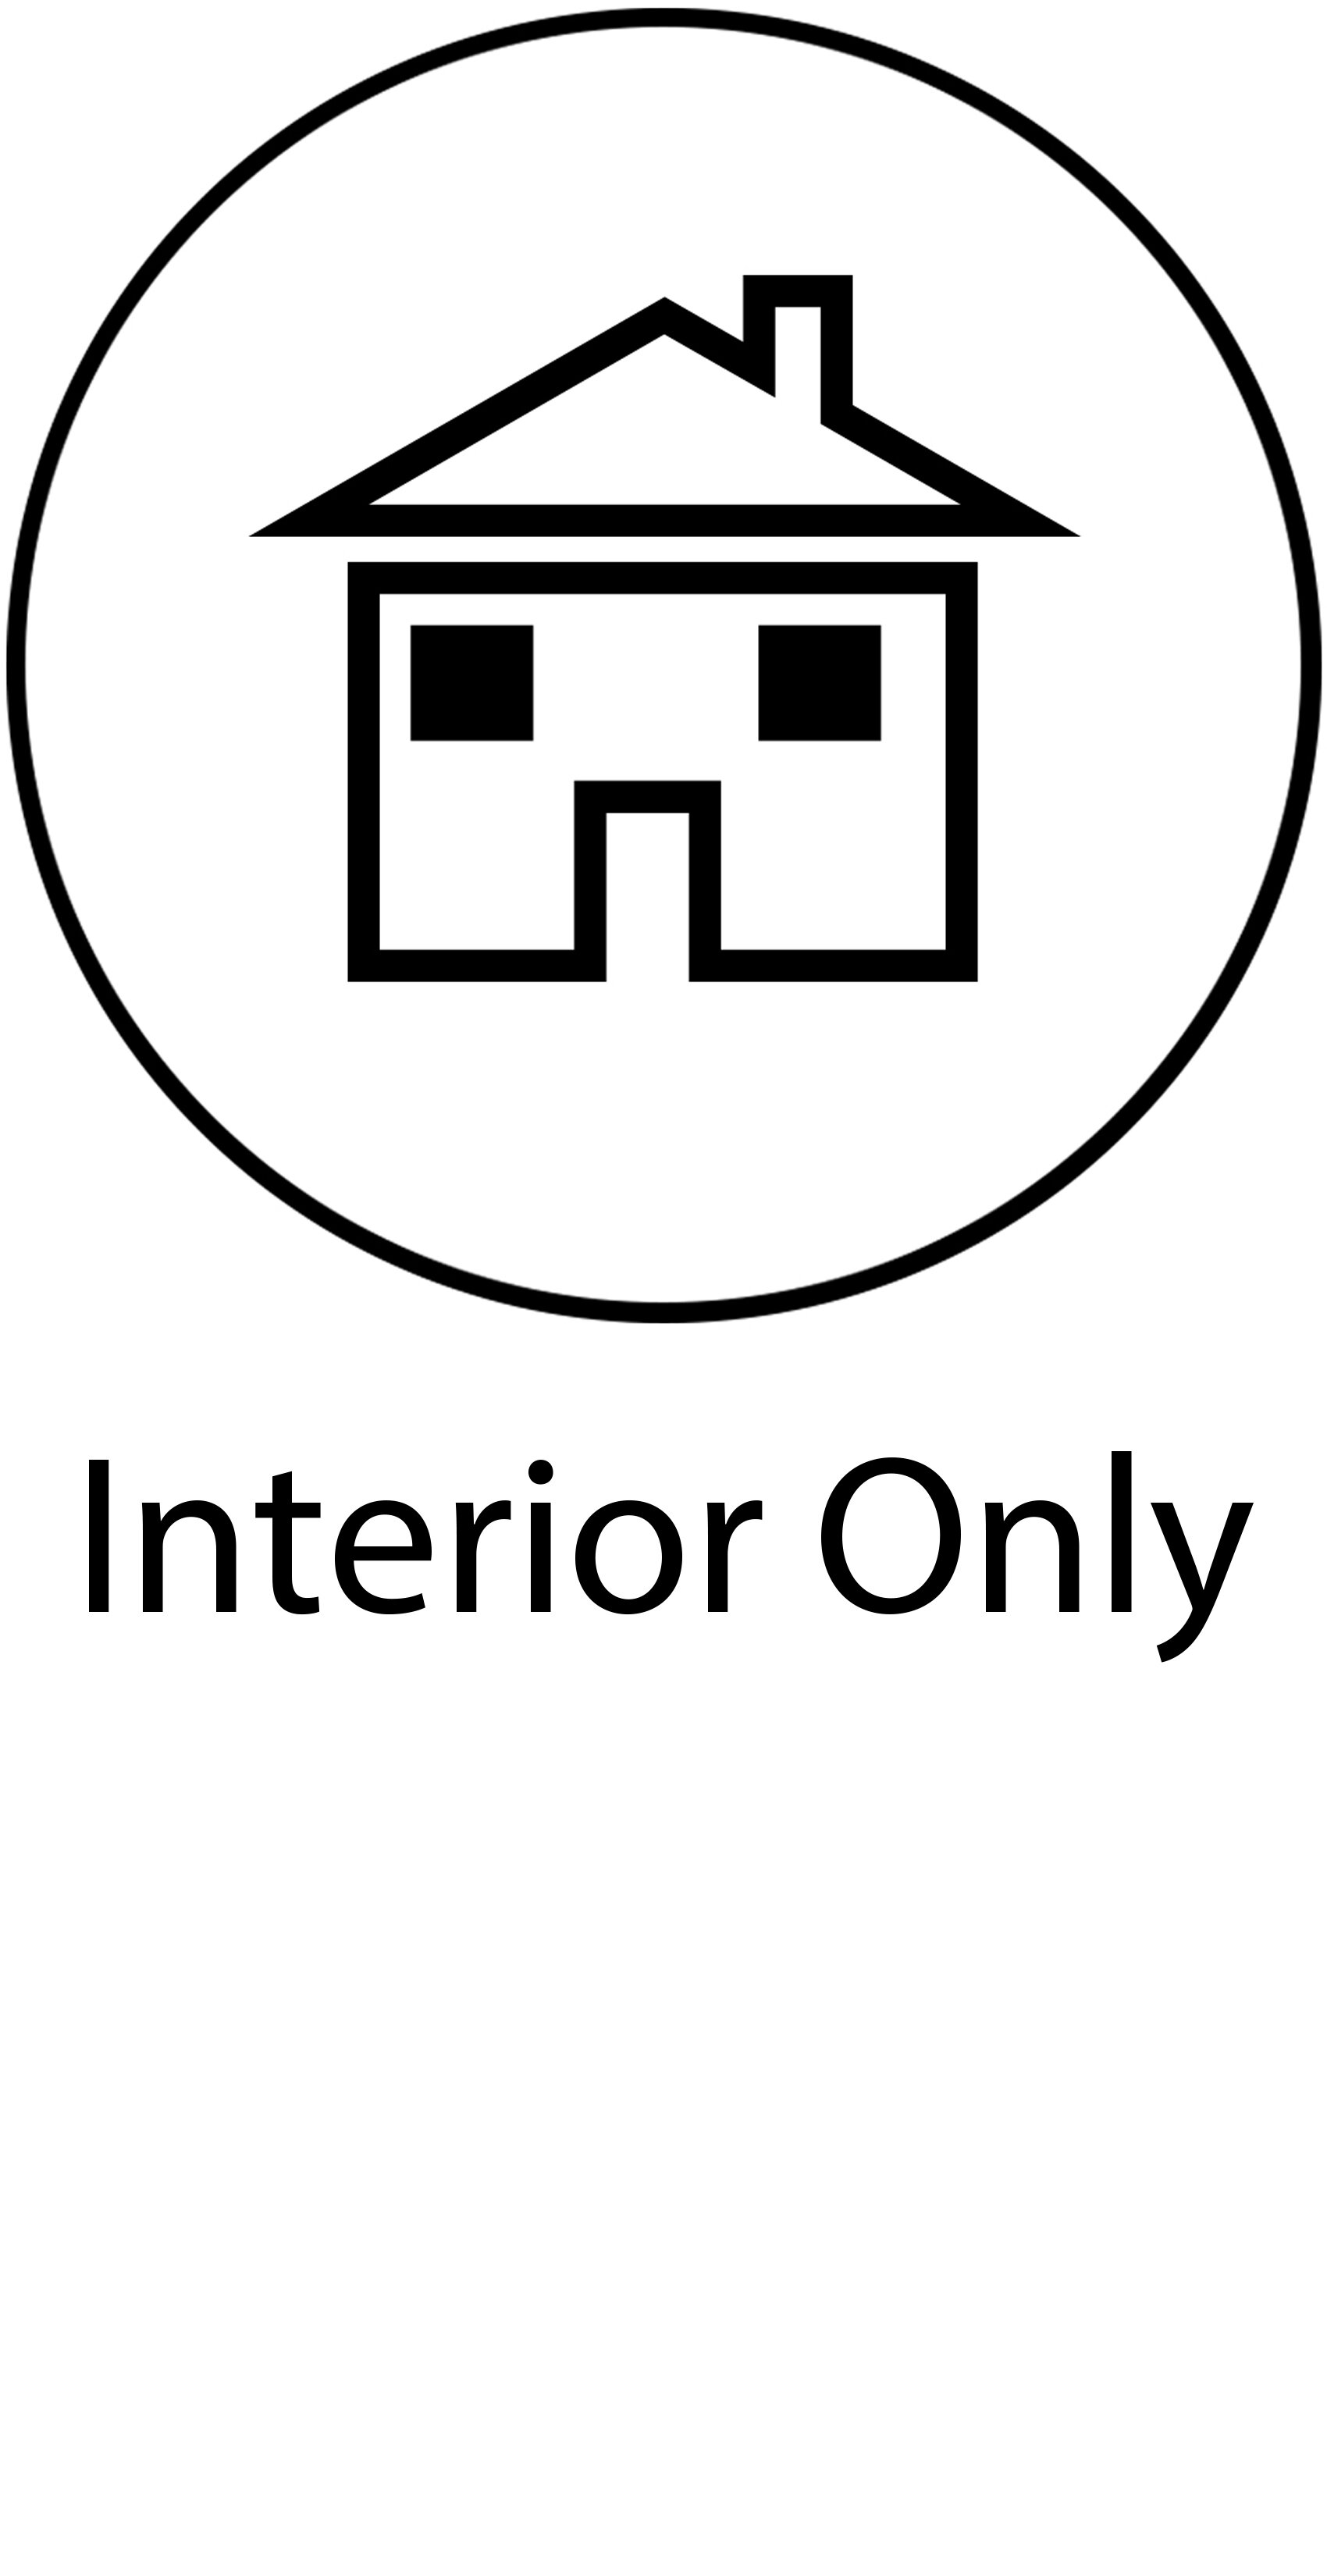 02 Interior Only.jpg